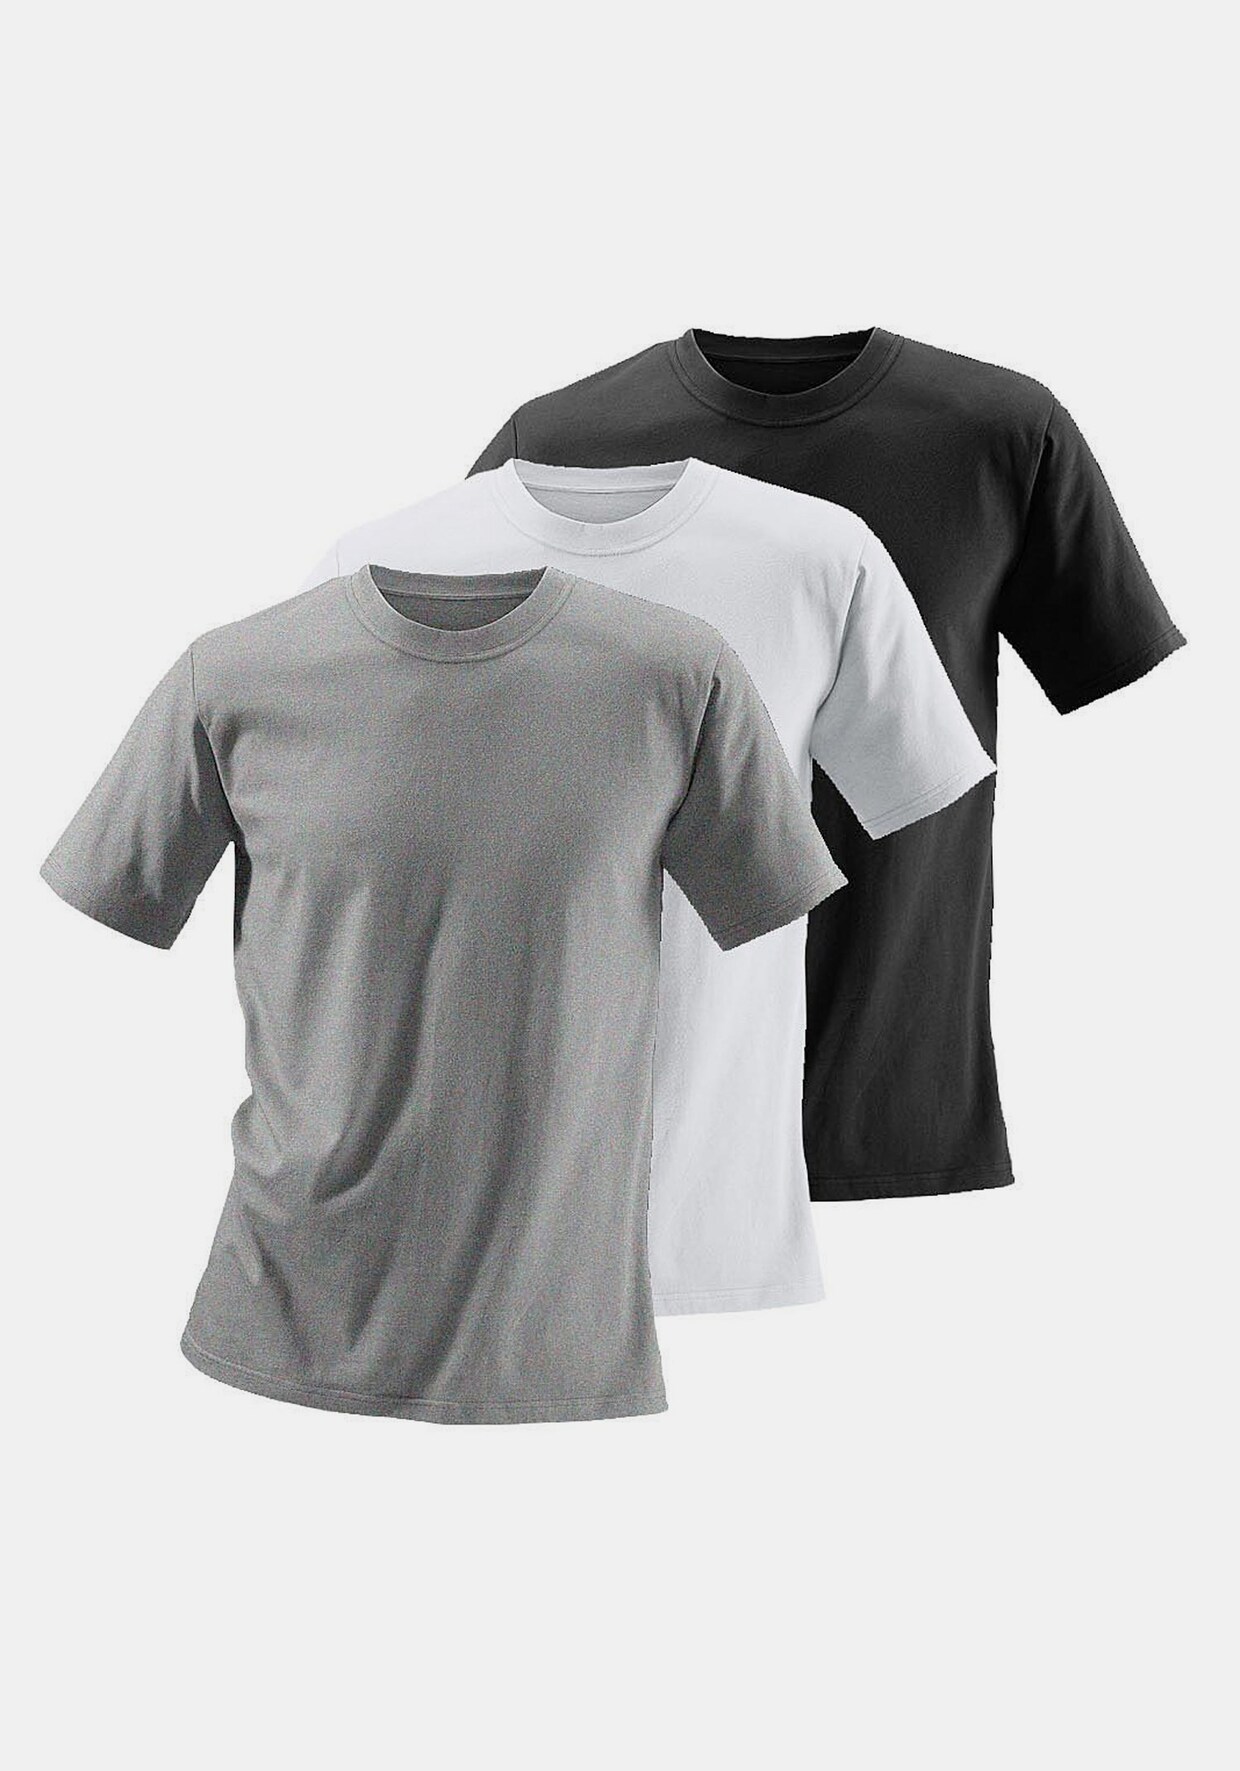 H.I.S T-Shirt - 1x grau-meliert + 1x weiß + 1x schwarz